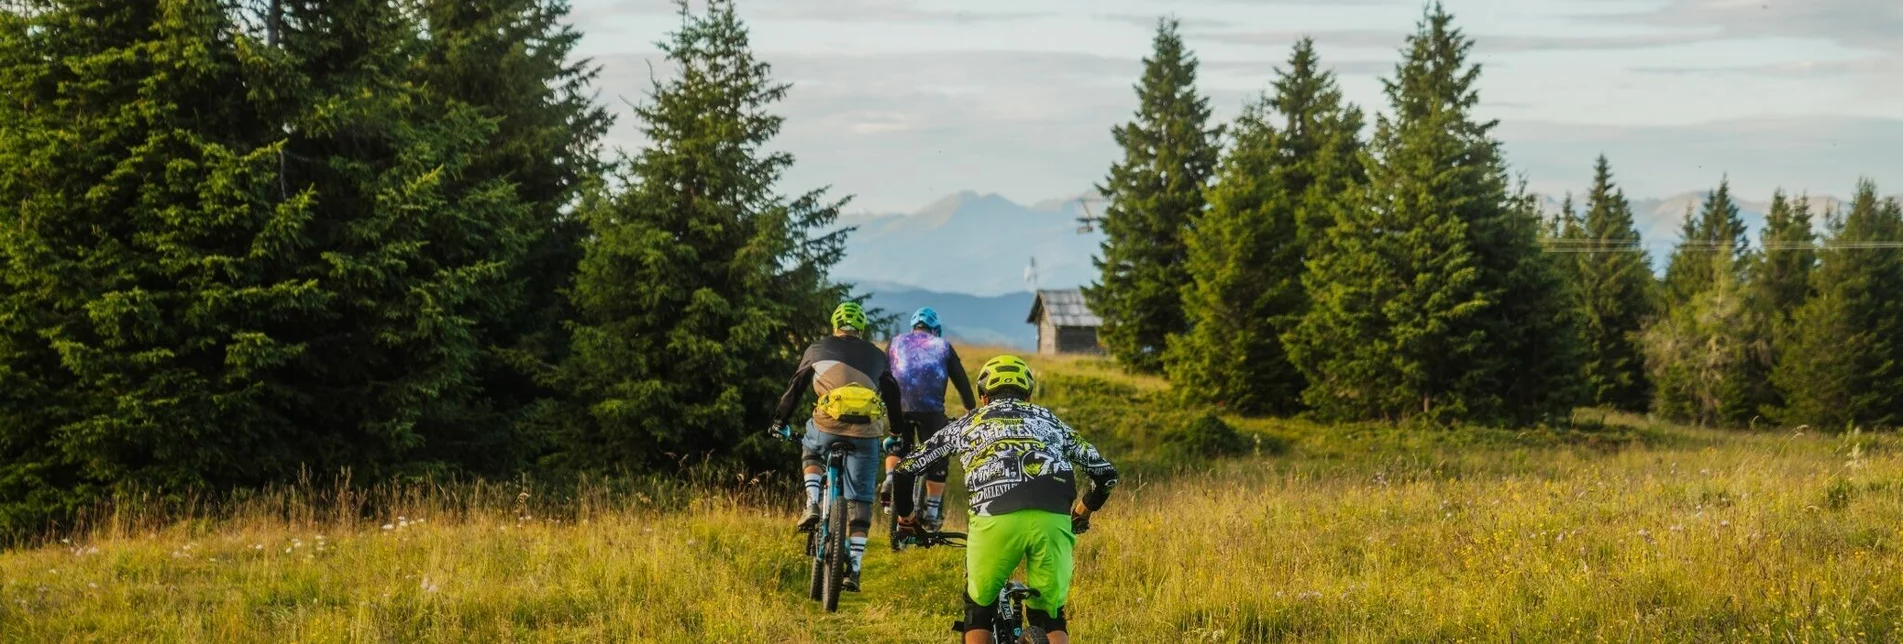 Mountain Biking Grebenzen Hightrail - Touren-Impression #1 | © Tourismusverband Region Murau